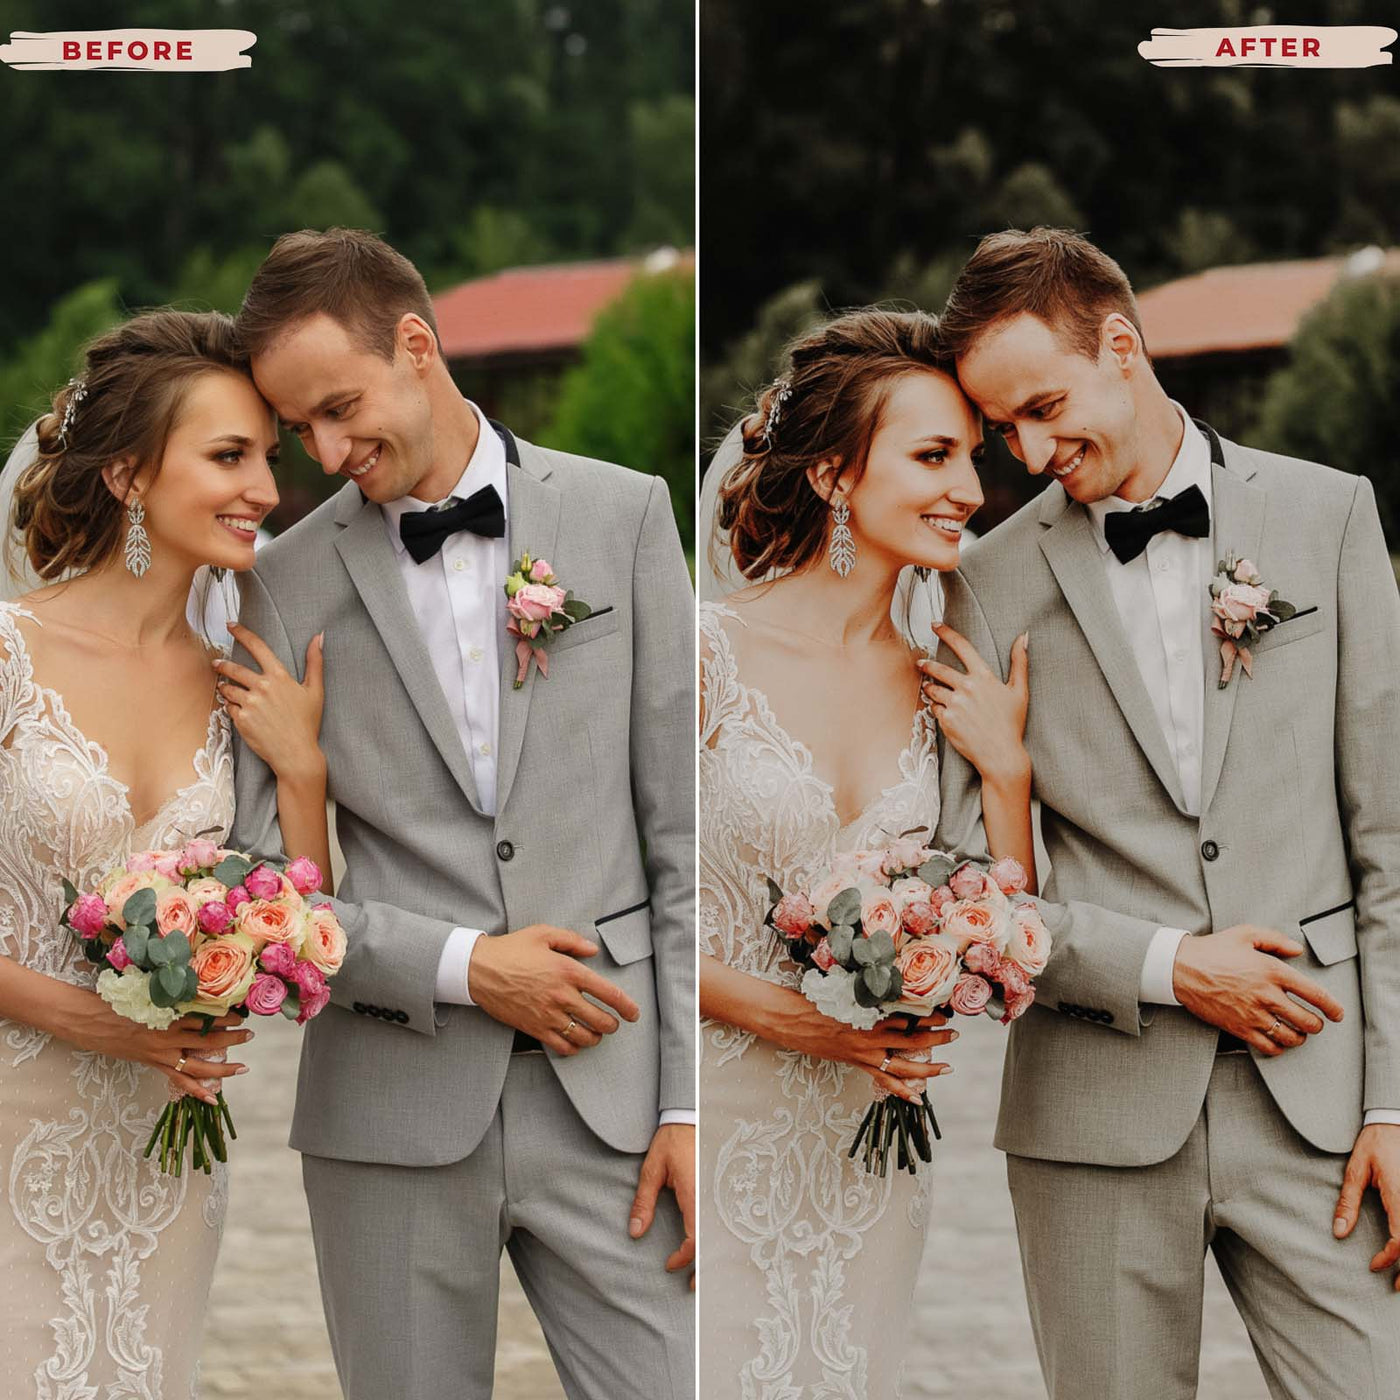 ROYAL WEDDING VIDEO LUTS (MOBILE & DESKTOP)